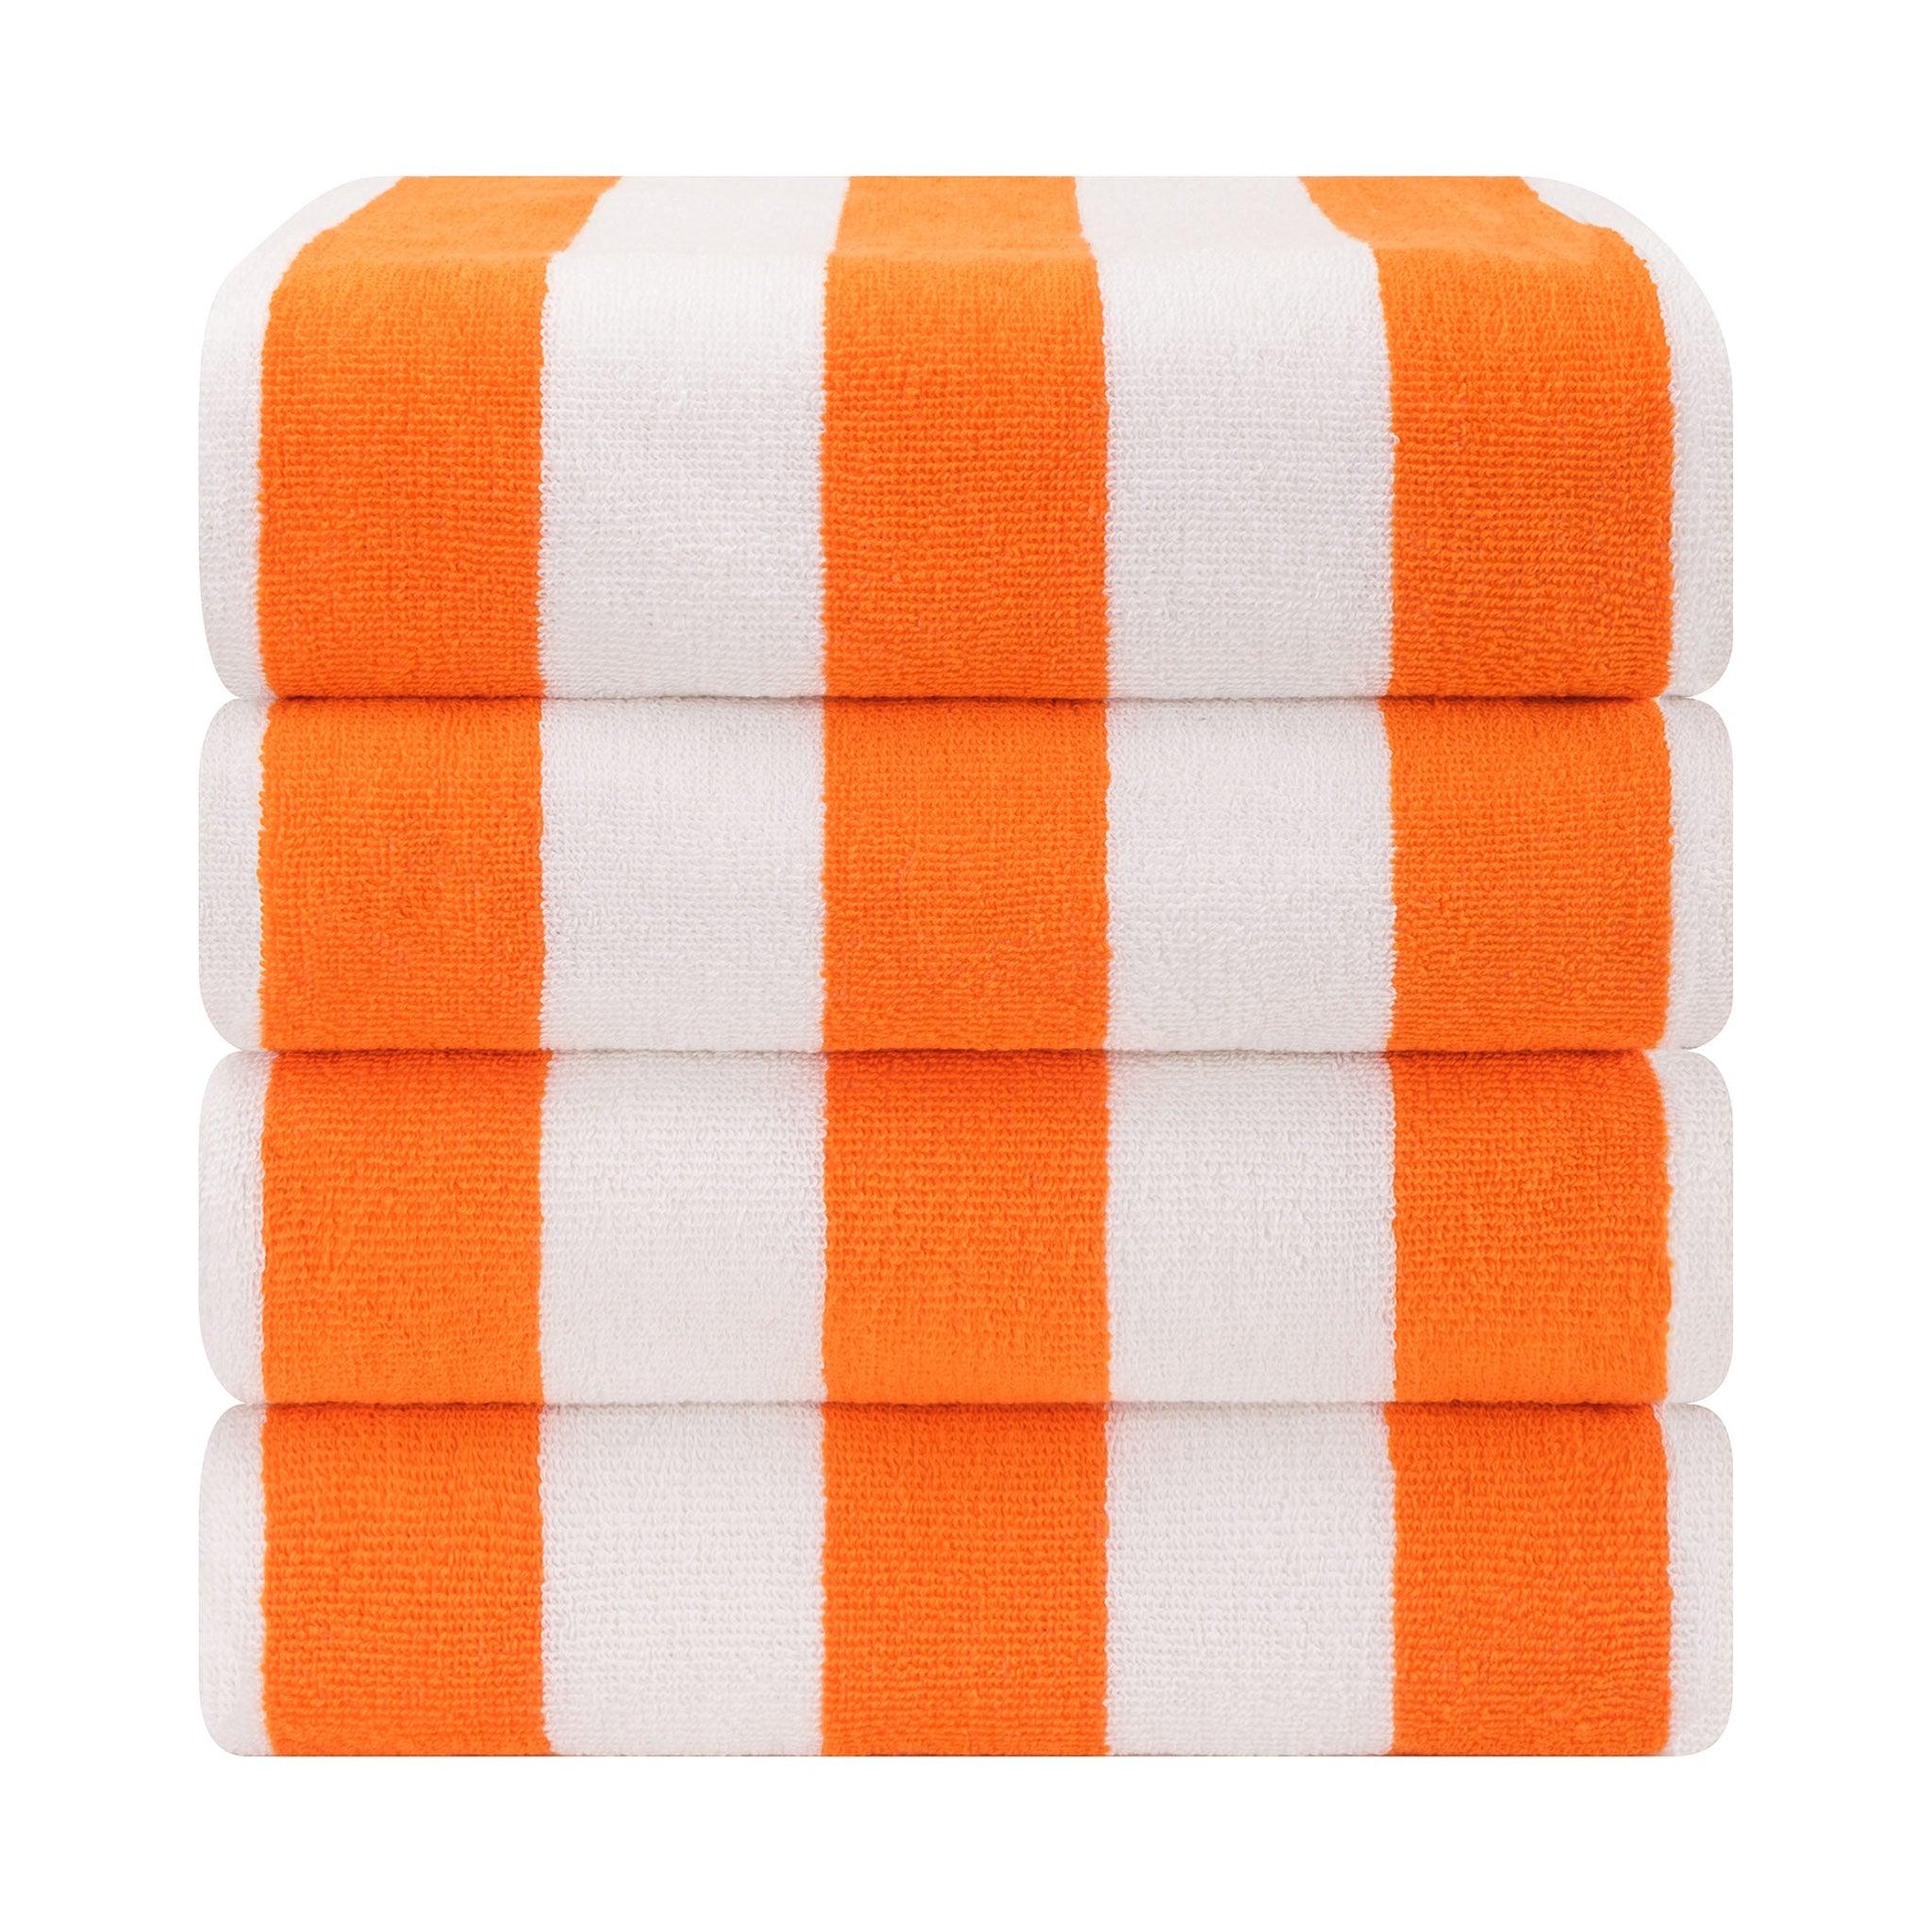 American Soft Linen 100% Cotton 4 Pack Beach Towels Cabana Striped Pool Towels -orange-2